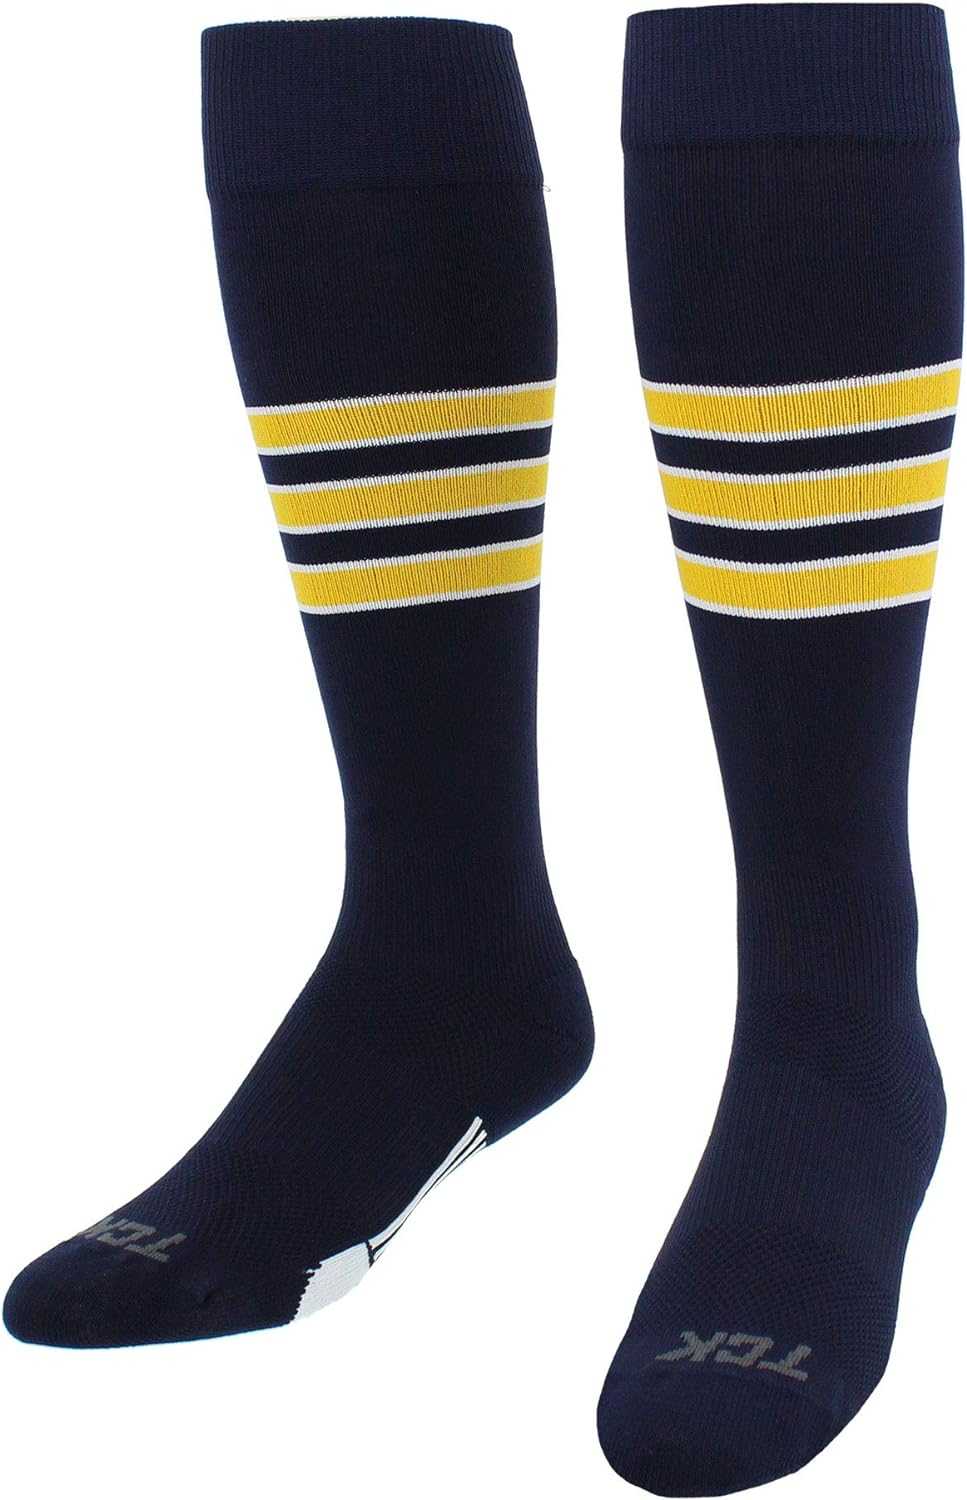 TCK Dugout Knee High Socks - Navy White Gold - HIT a Double - 2